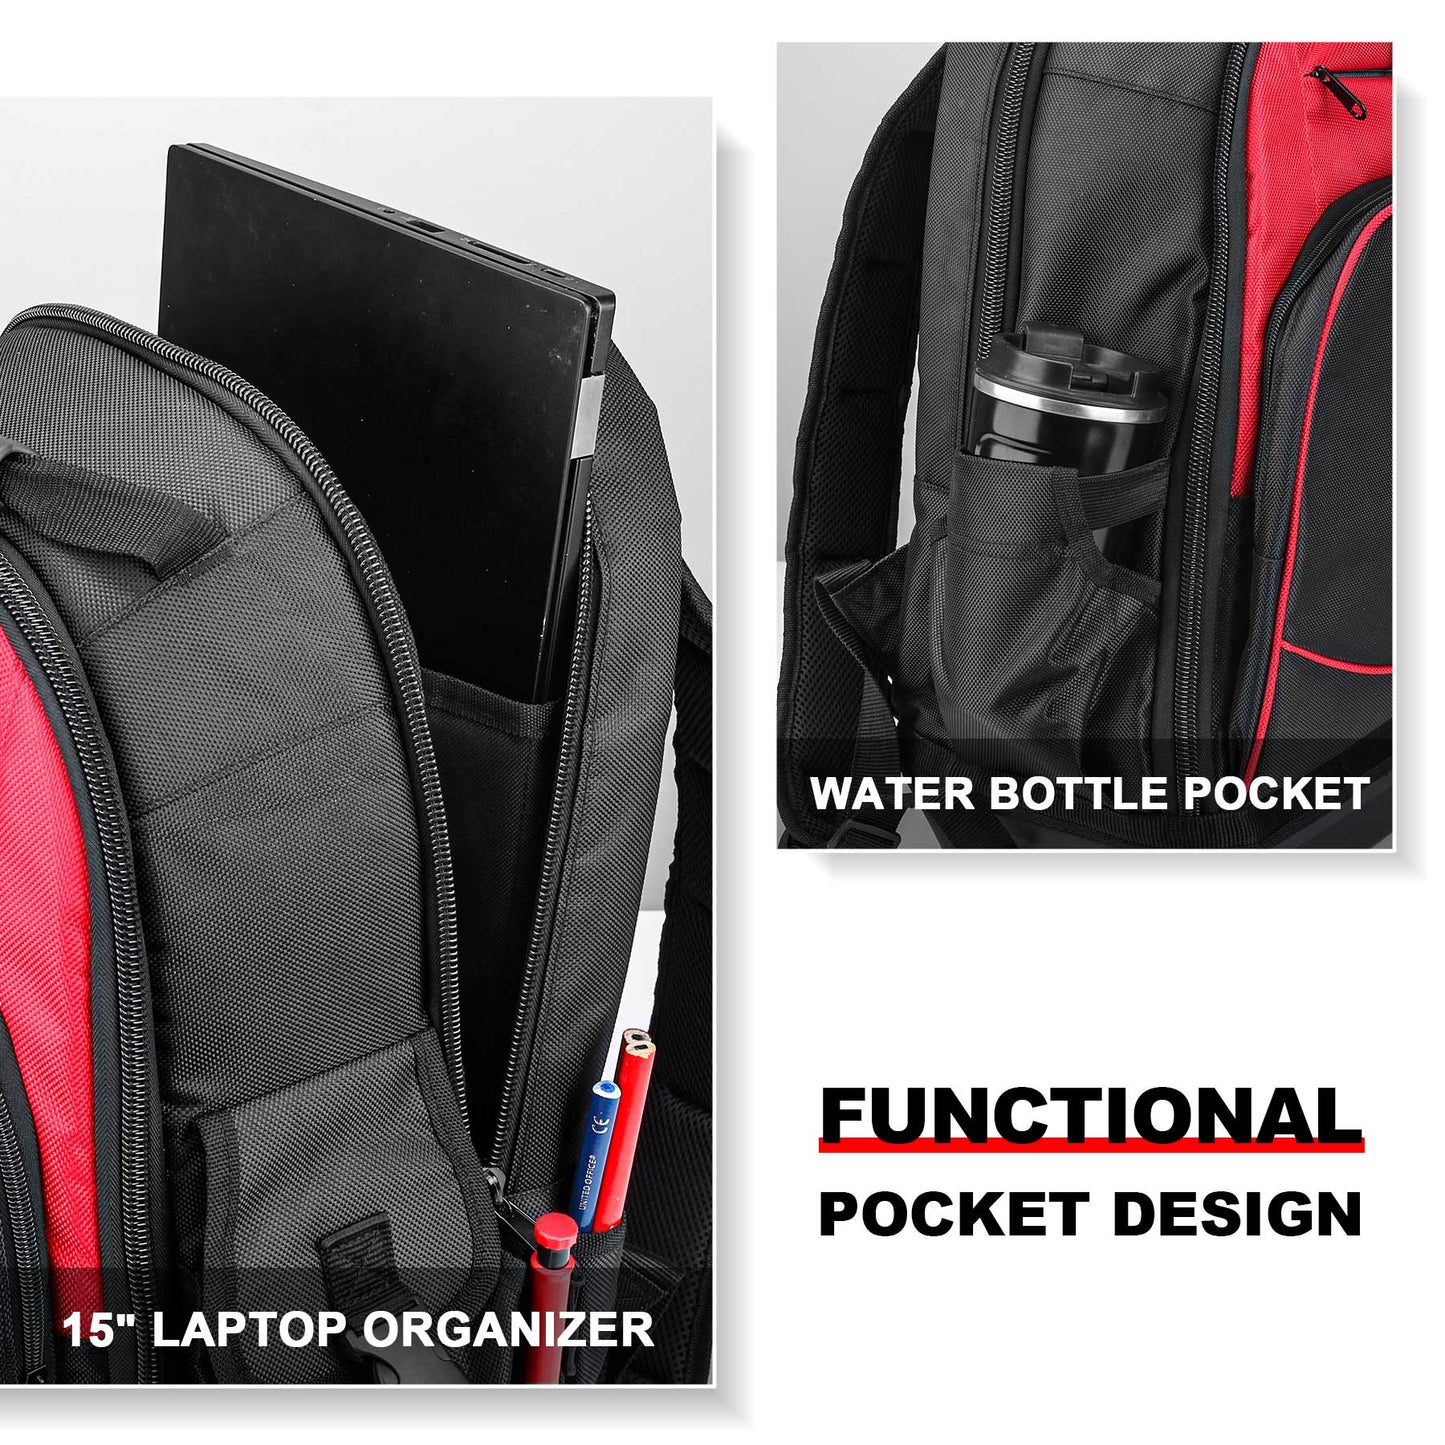 HAUTMEC Pro Tool Backpack,Large Capacity Tool Organizer,1680D Heavy Duty Tool Bag HT0285